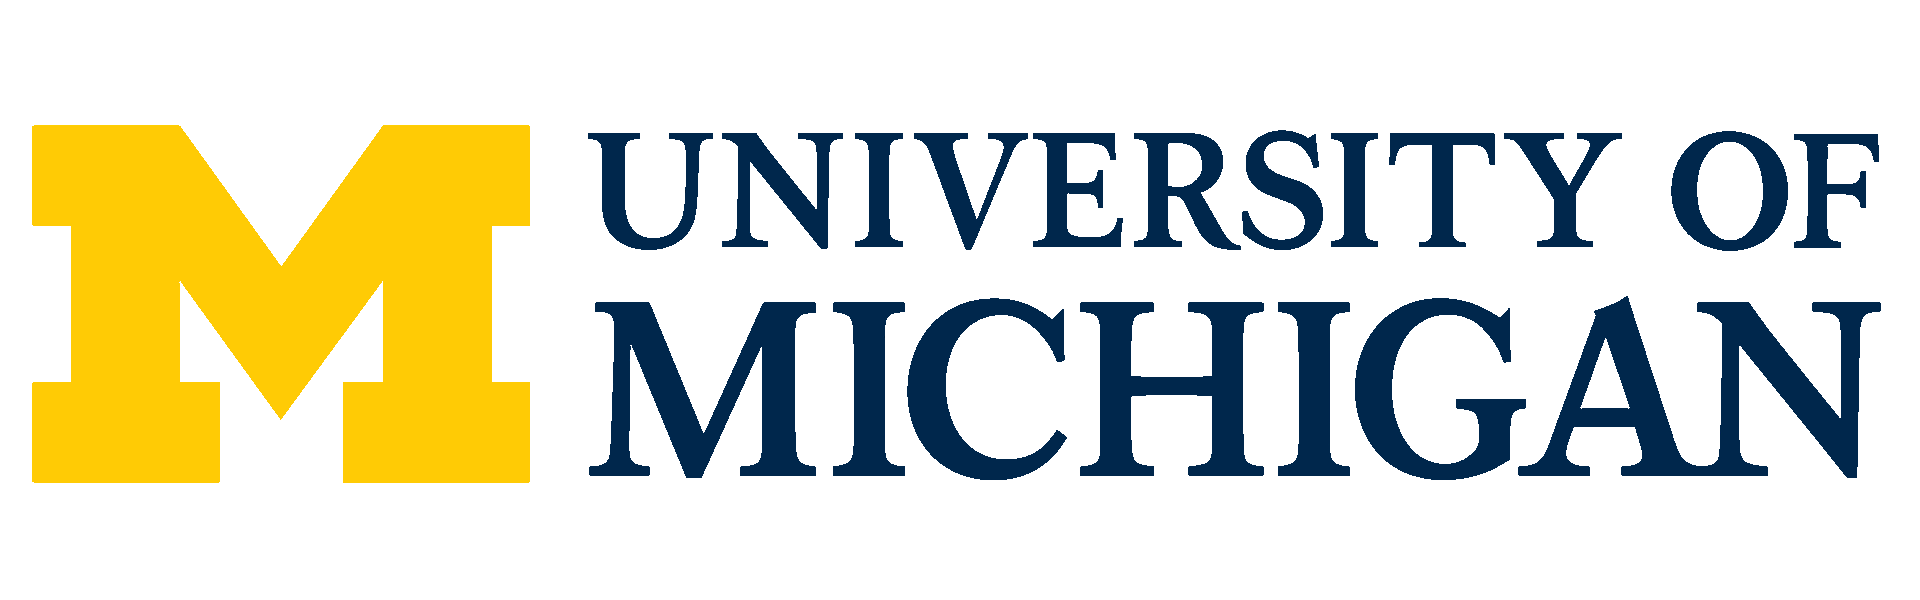 University of Michigan Logo cropped